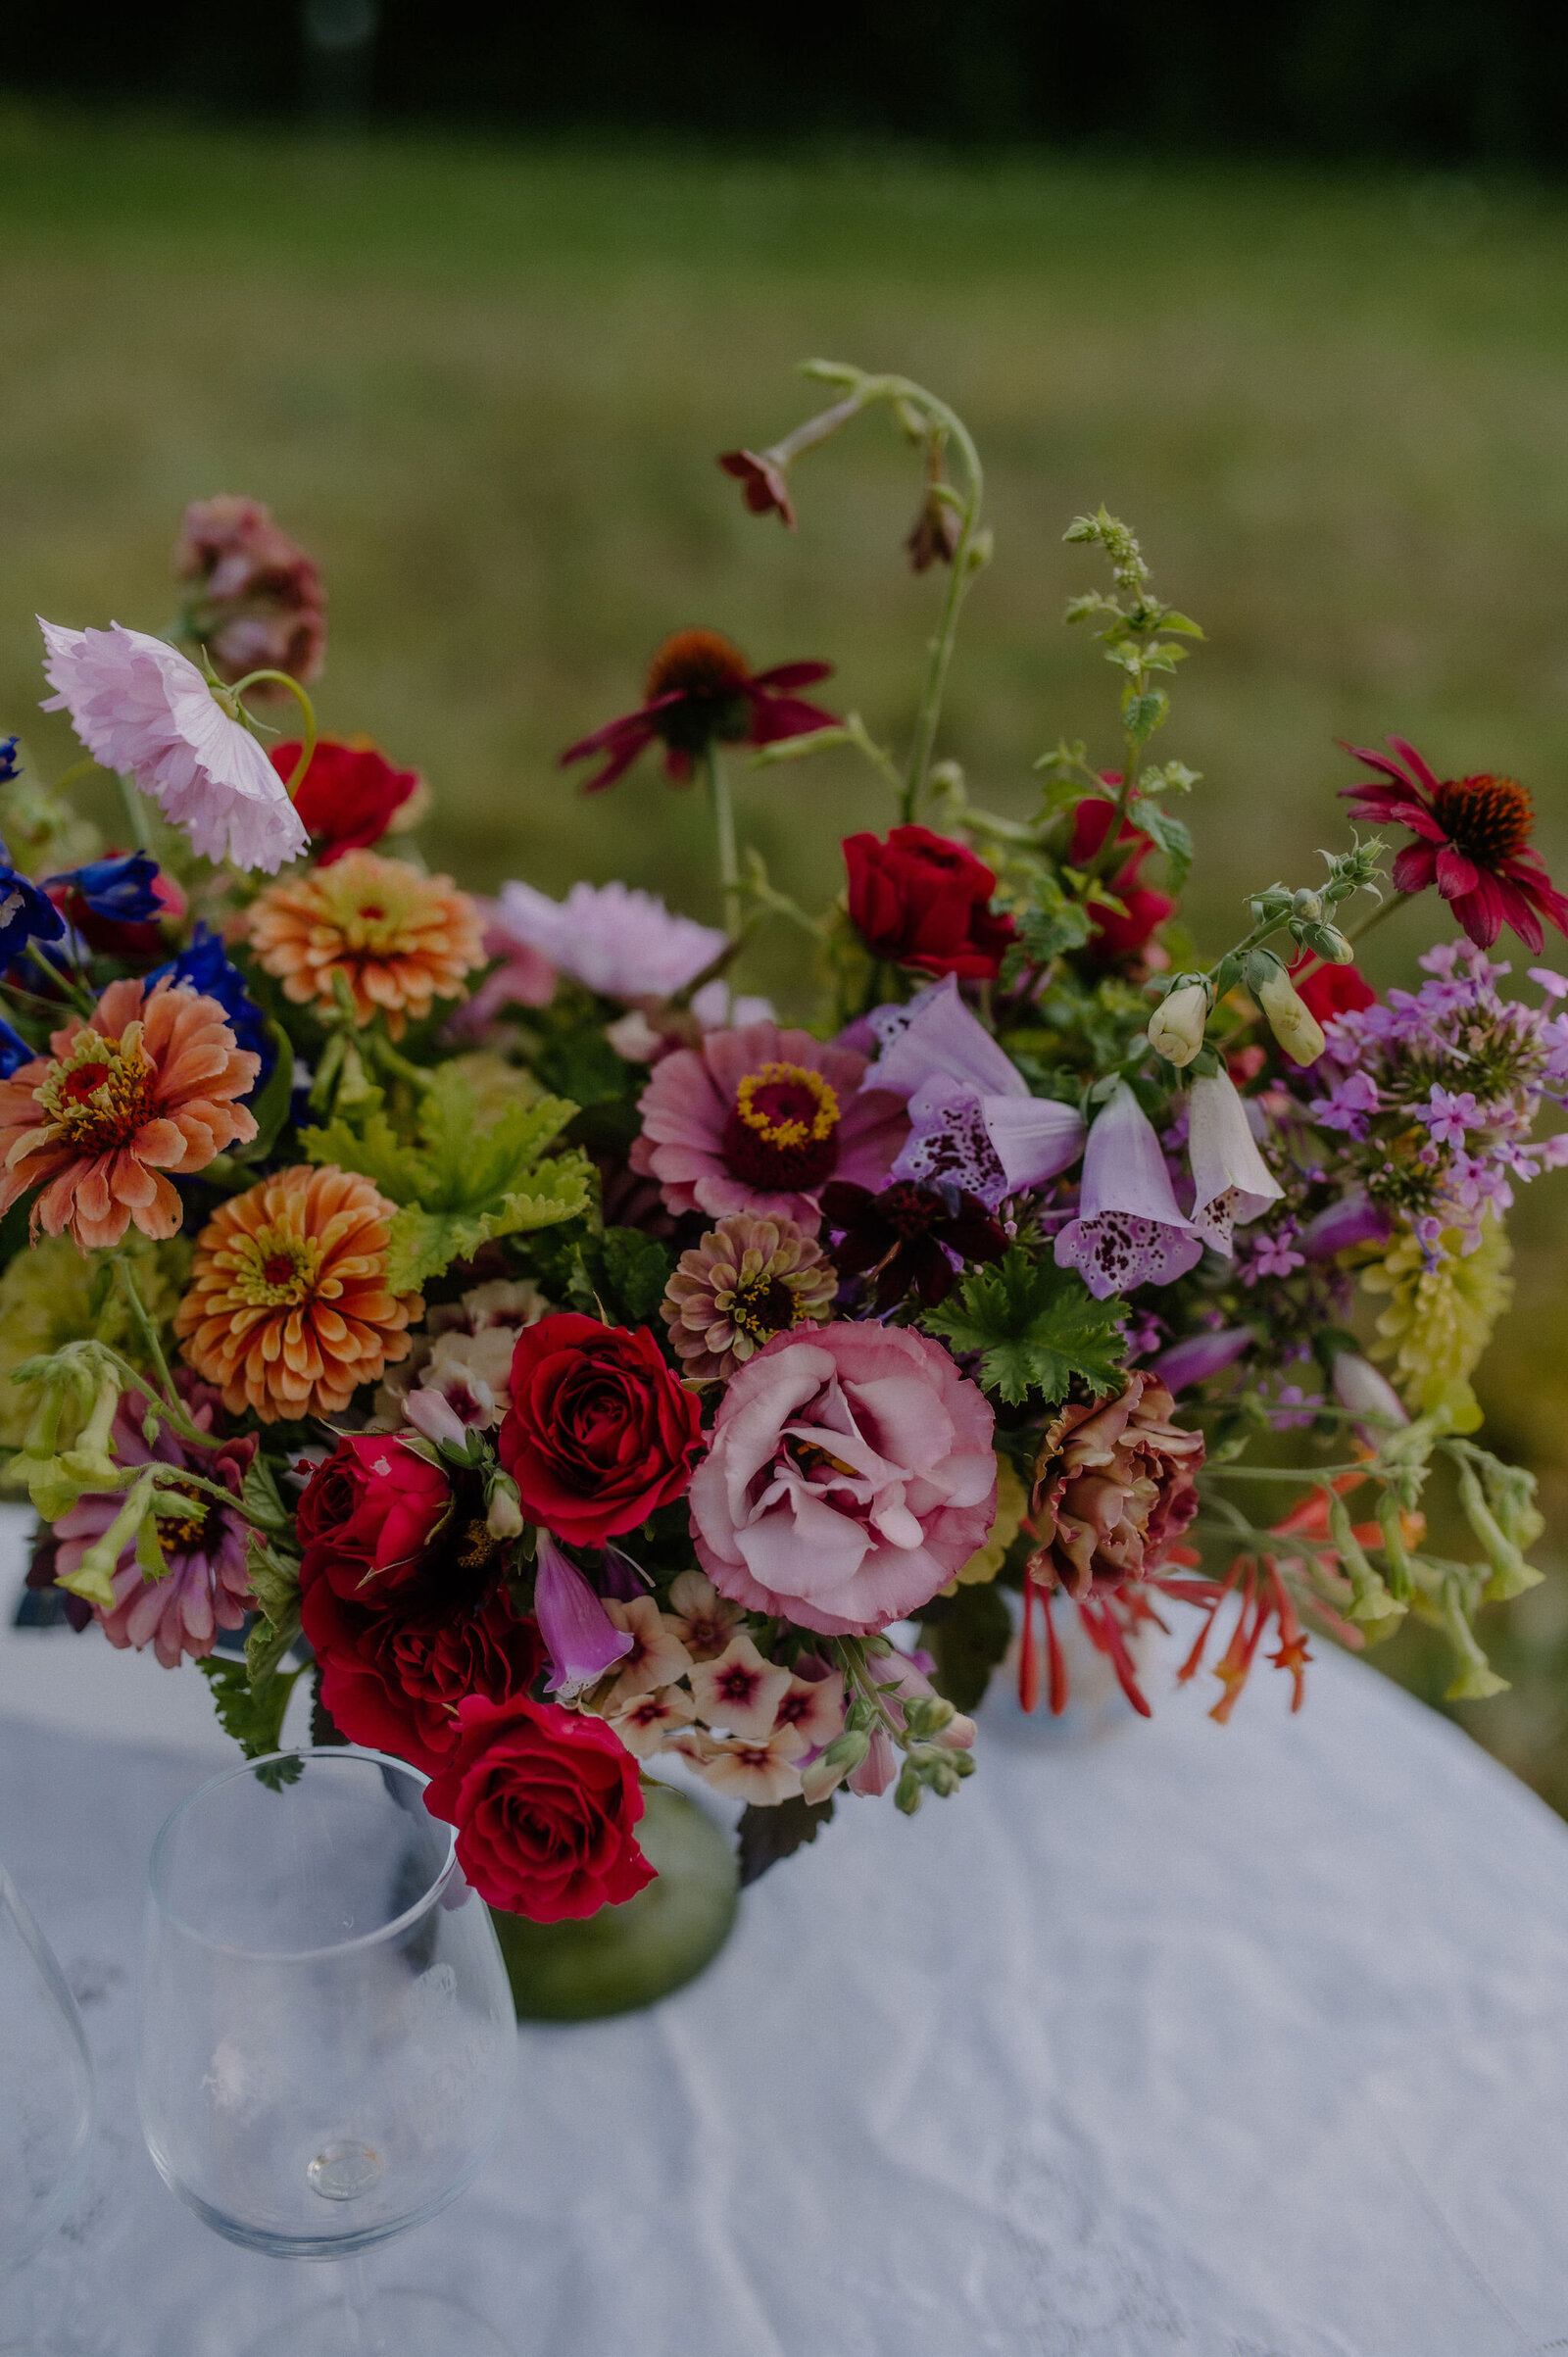 colorful floral arrangement bouquet with purple, red, orange, pink flowers